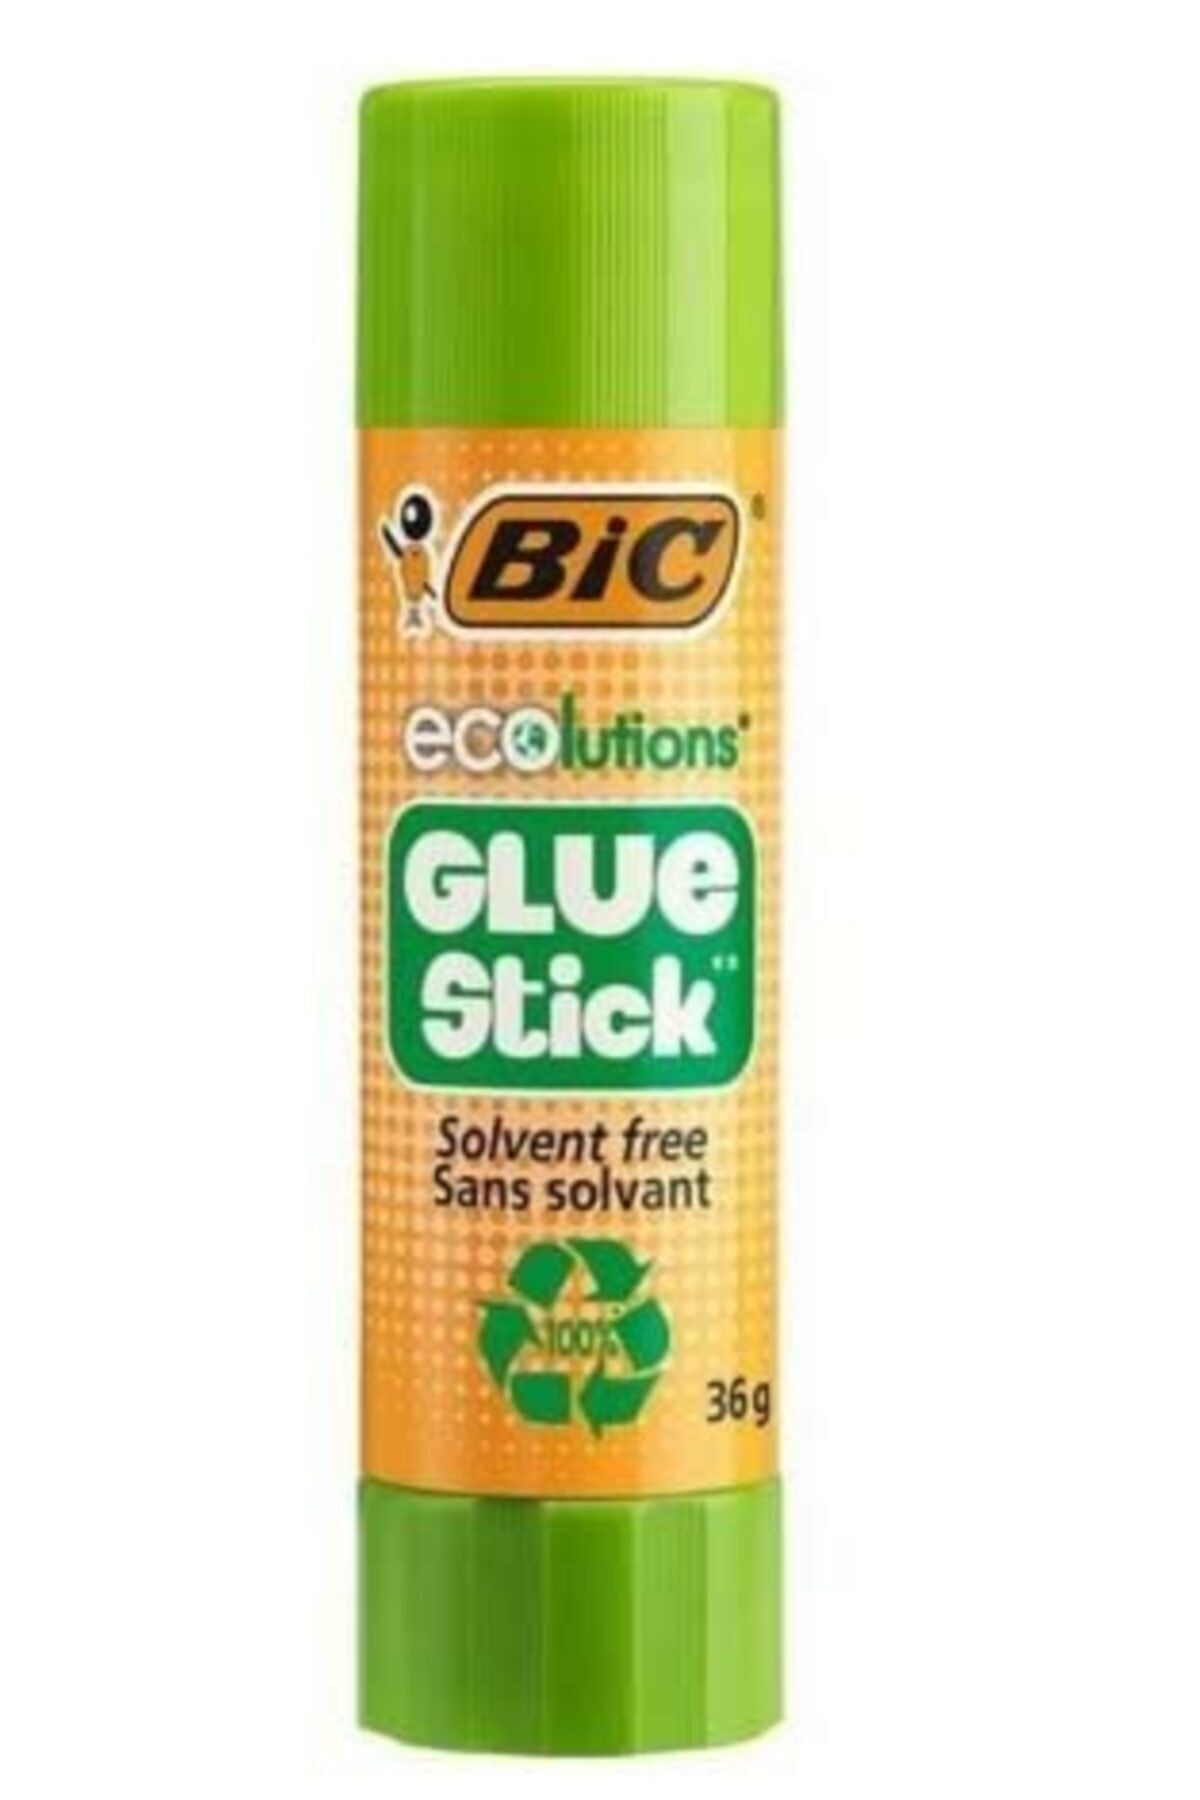 Bic 36 gr Eco Glue Stick